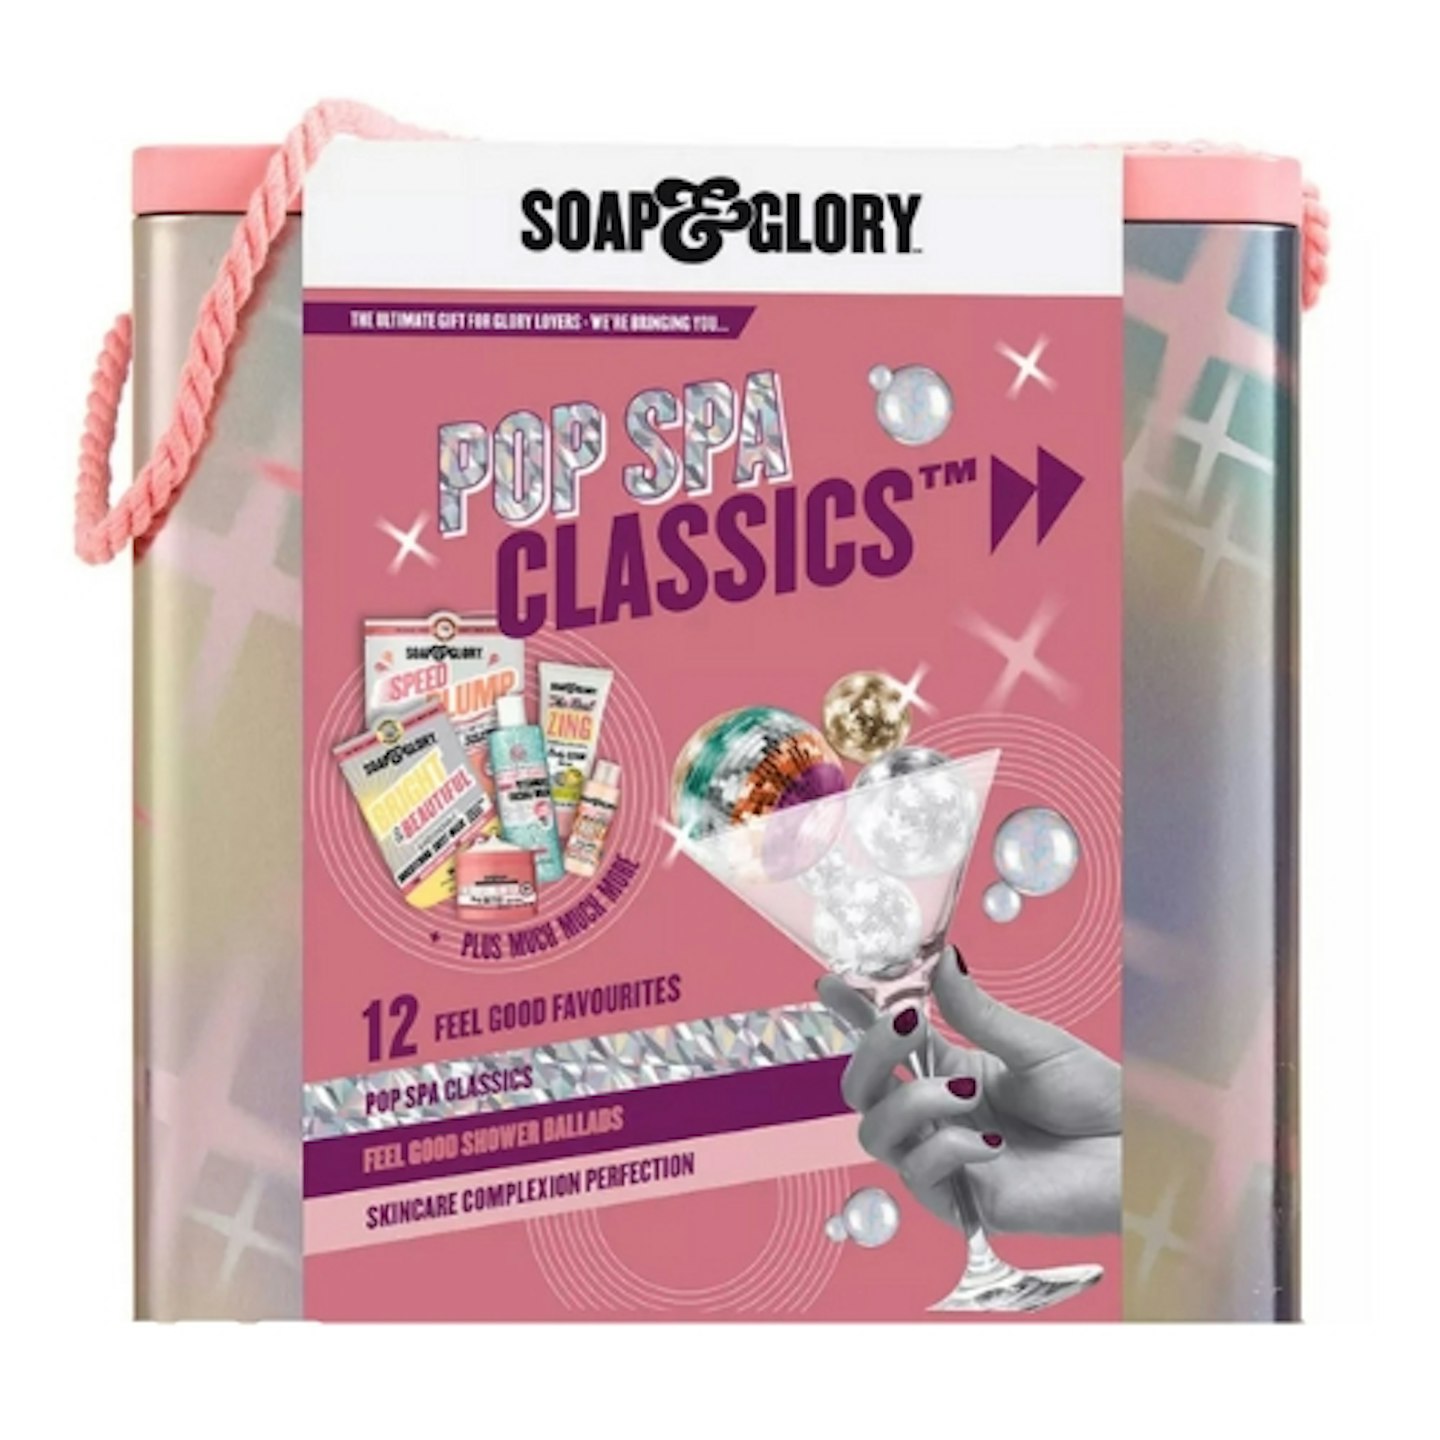 Soap & Glory Pop Spa Classics™ 12 Piece Gift Set